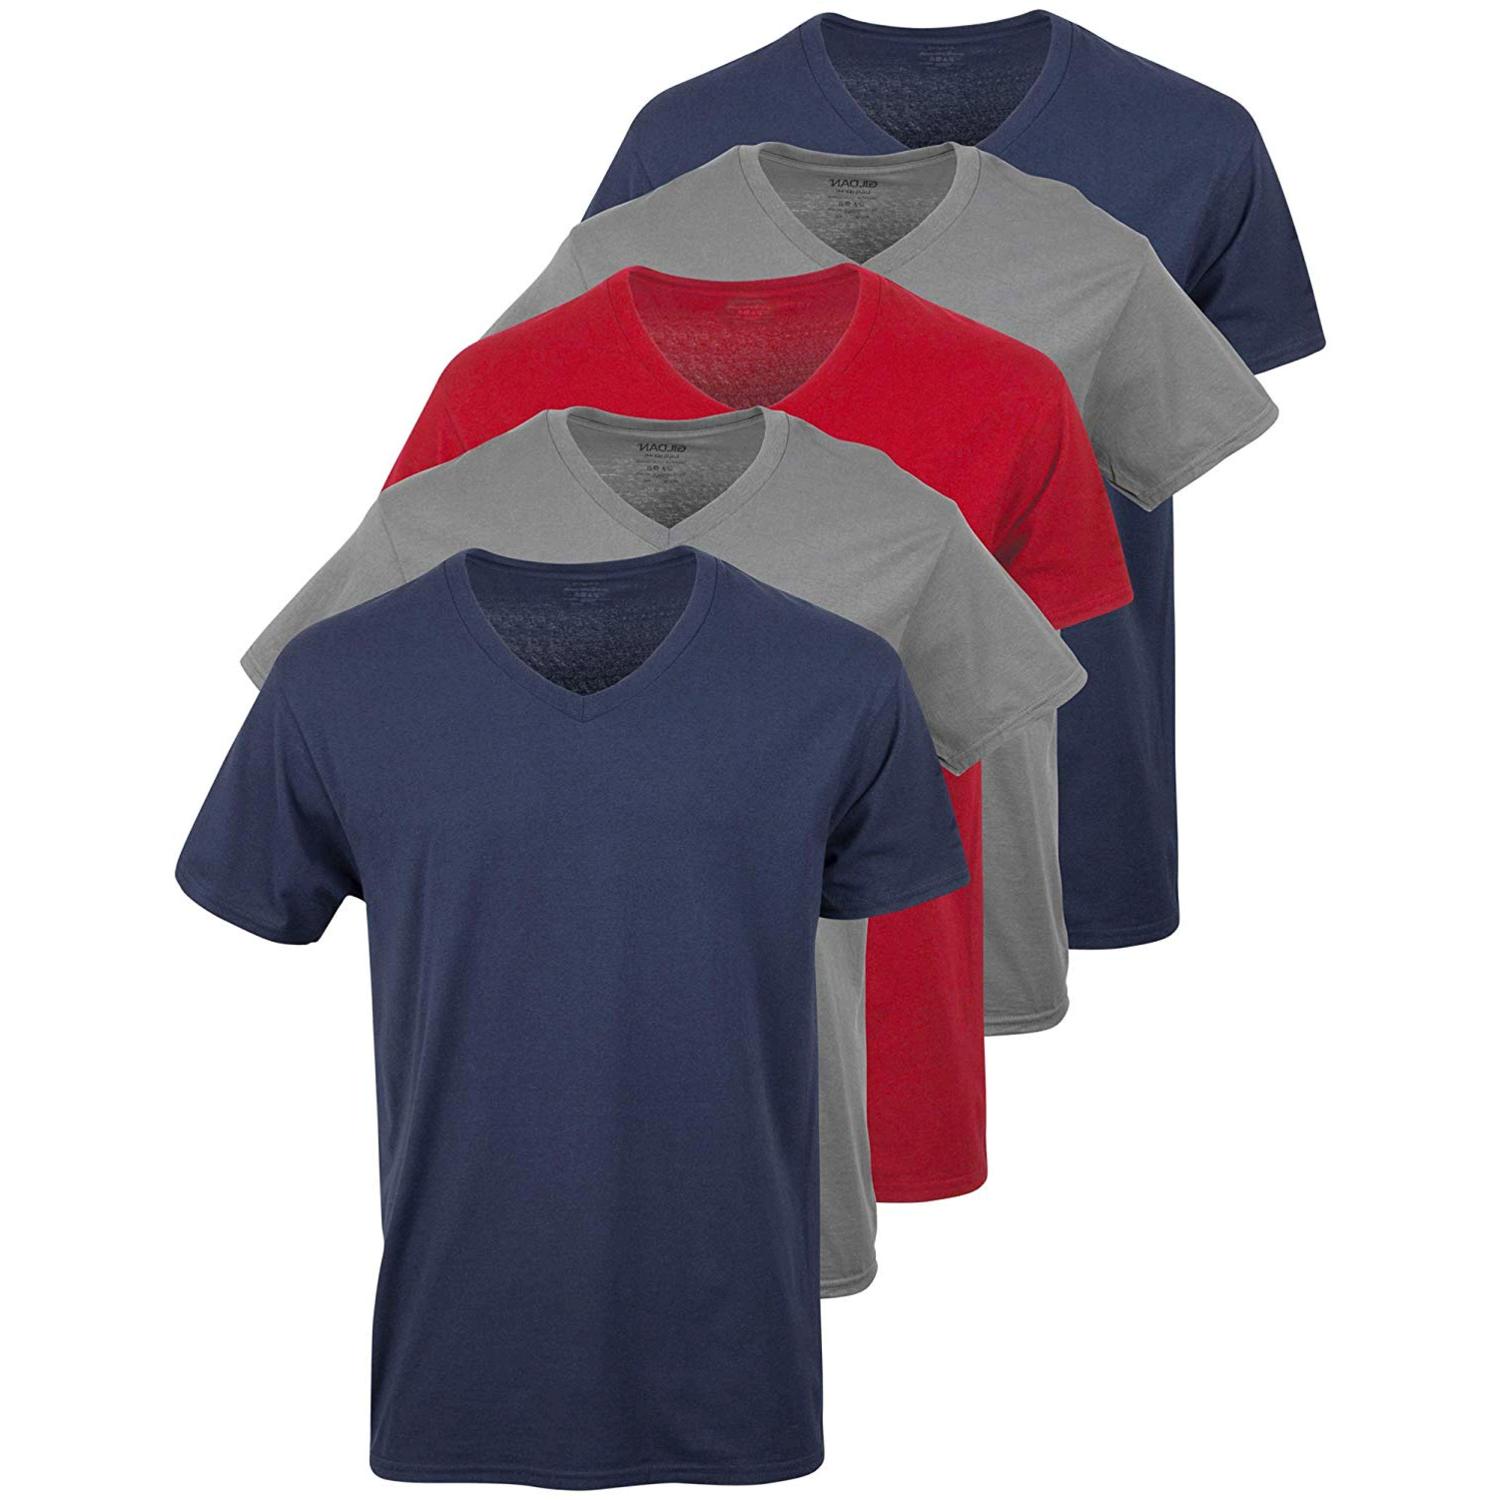 Gildan Men's V-Neck T-Shirts Multipack, Navy, Charcoal,, Red, Size XX ...